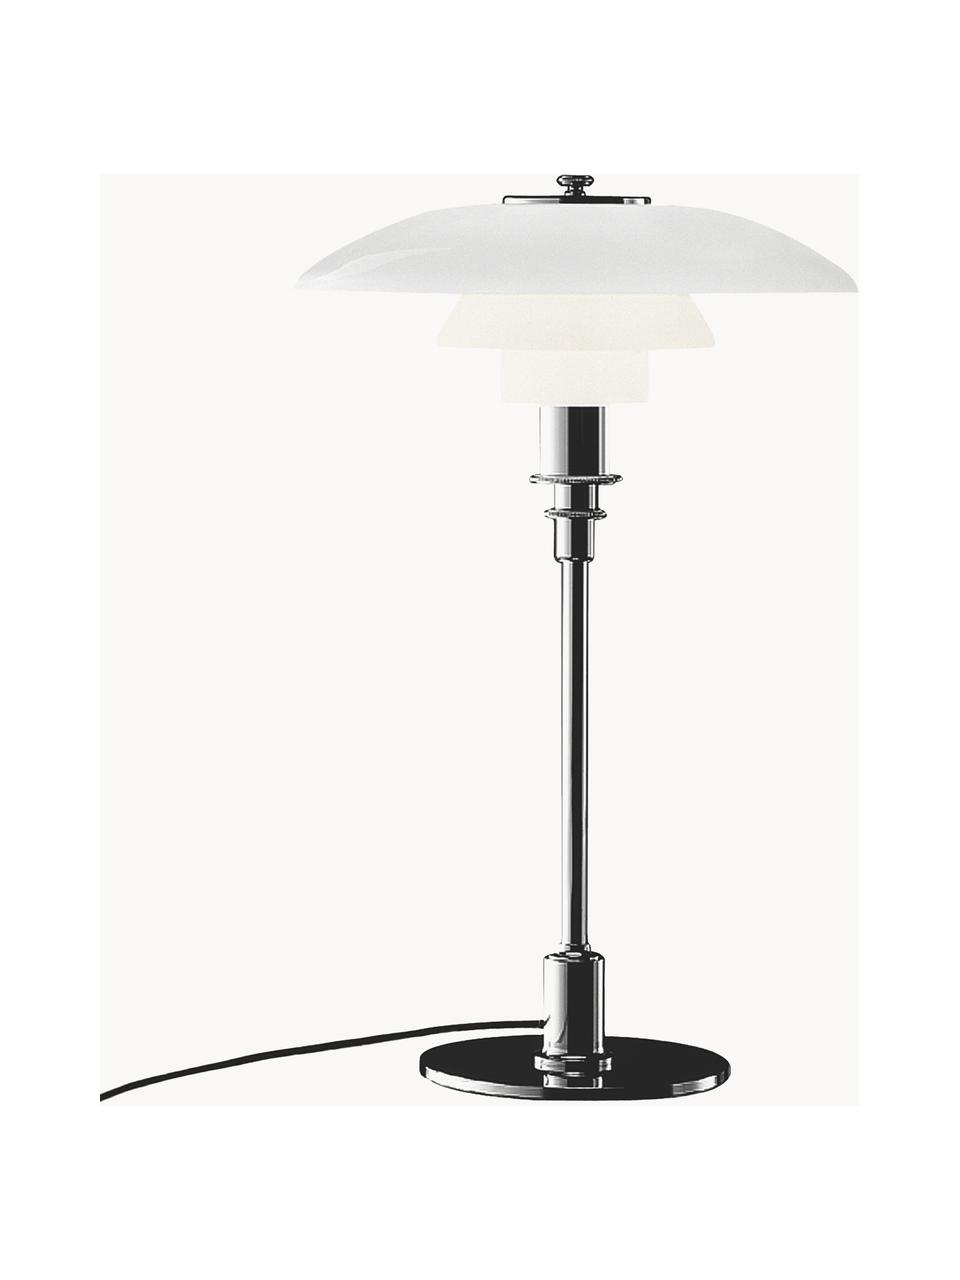 Grote tafellamp PH 3/2, mondgeblazen, Lampenkap: opaalglas, mondgeblazen, Zilverkleurig, wit, Ø 29 x H 47 cm